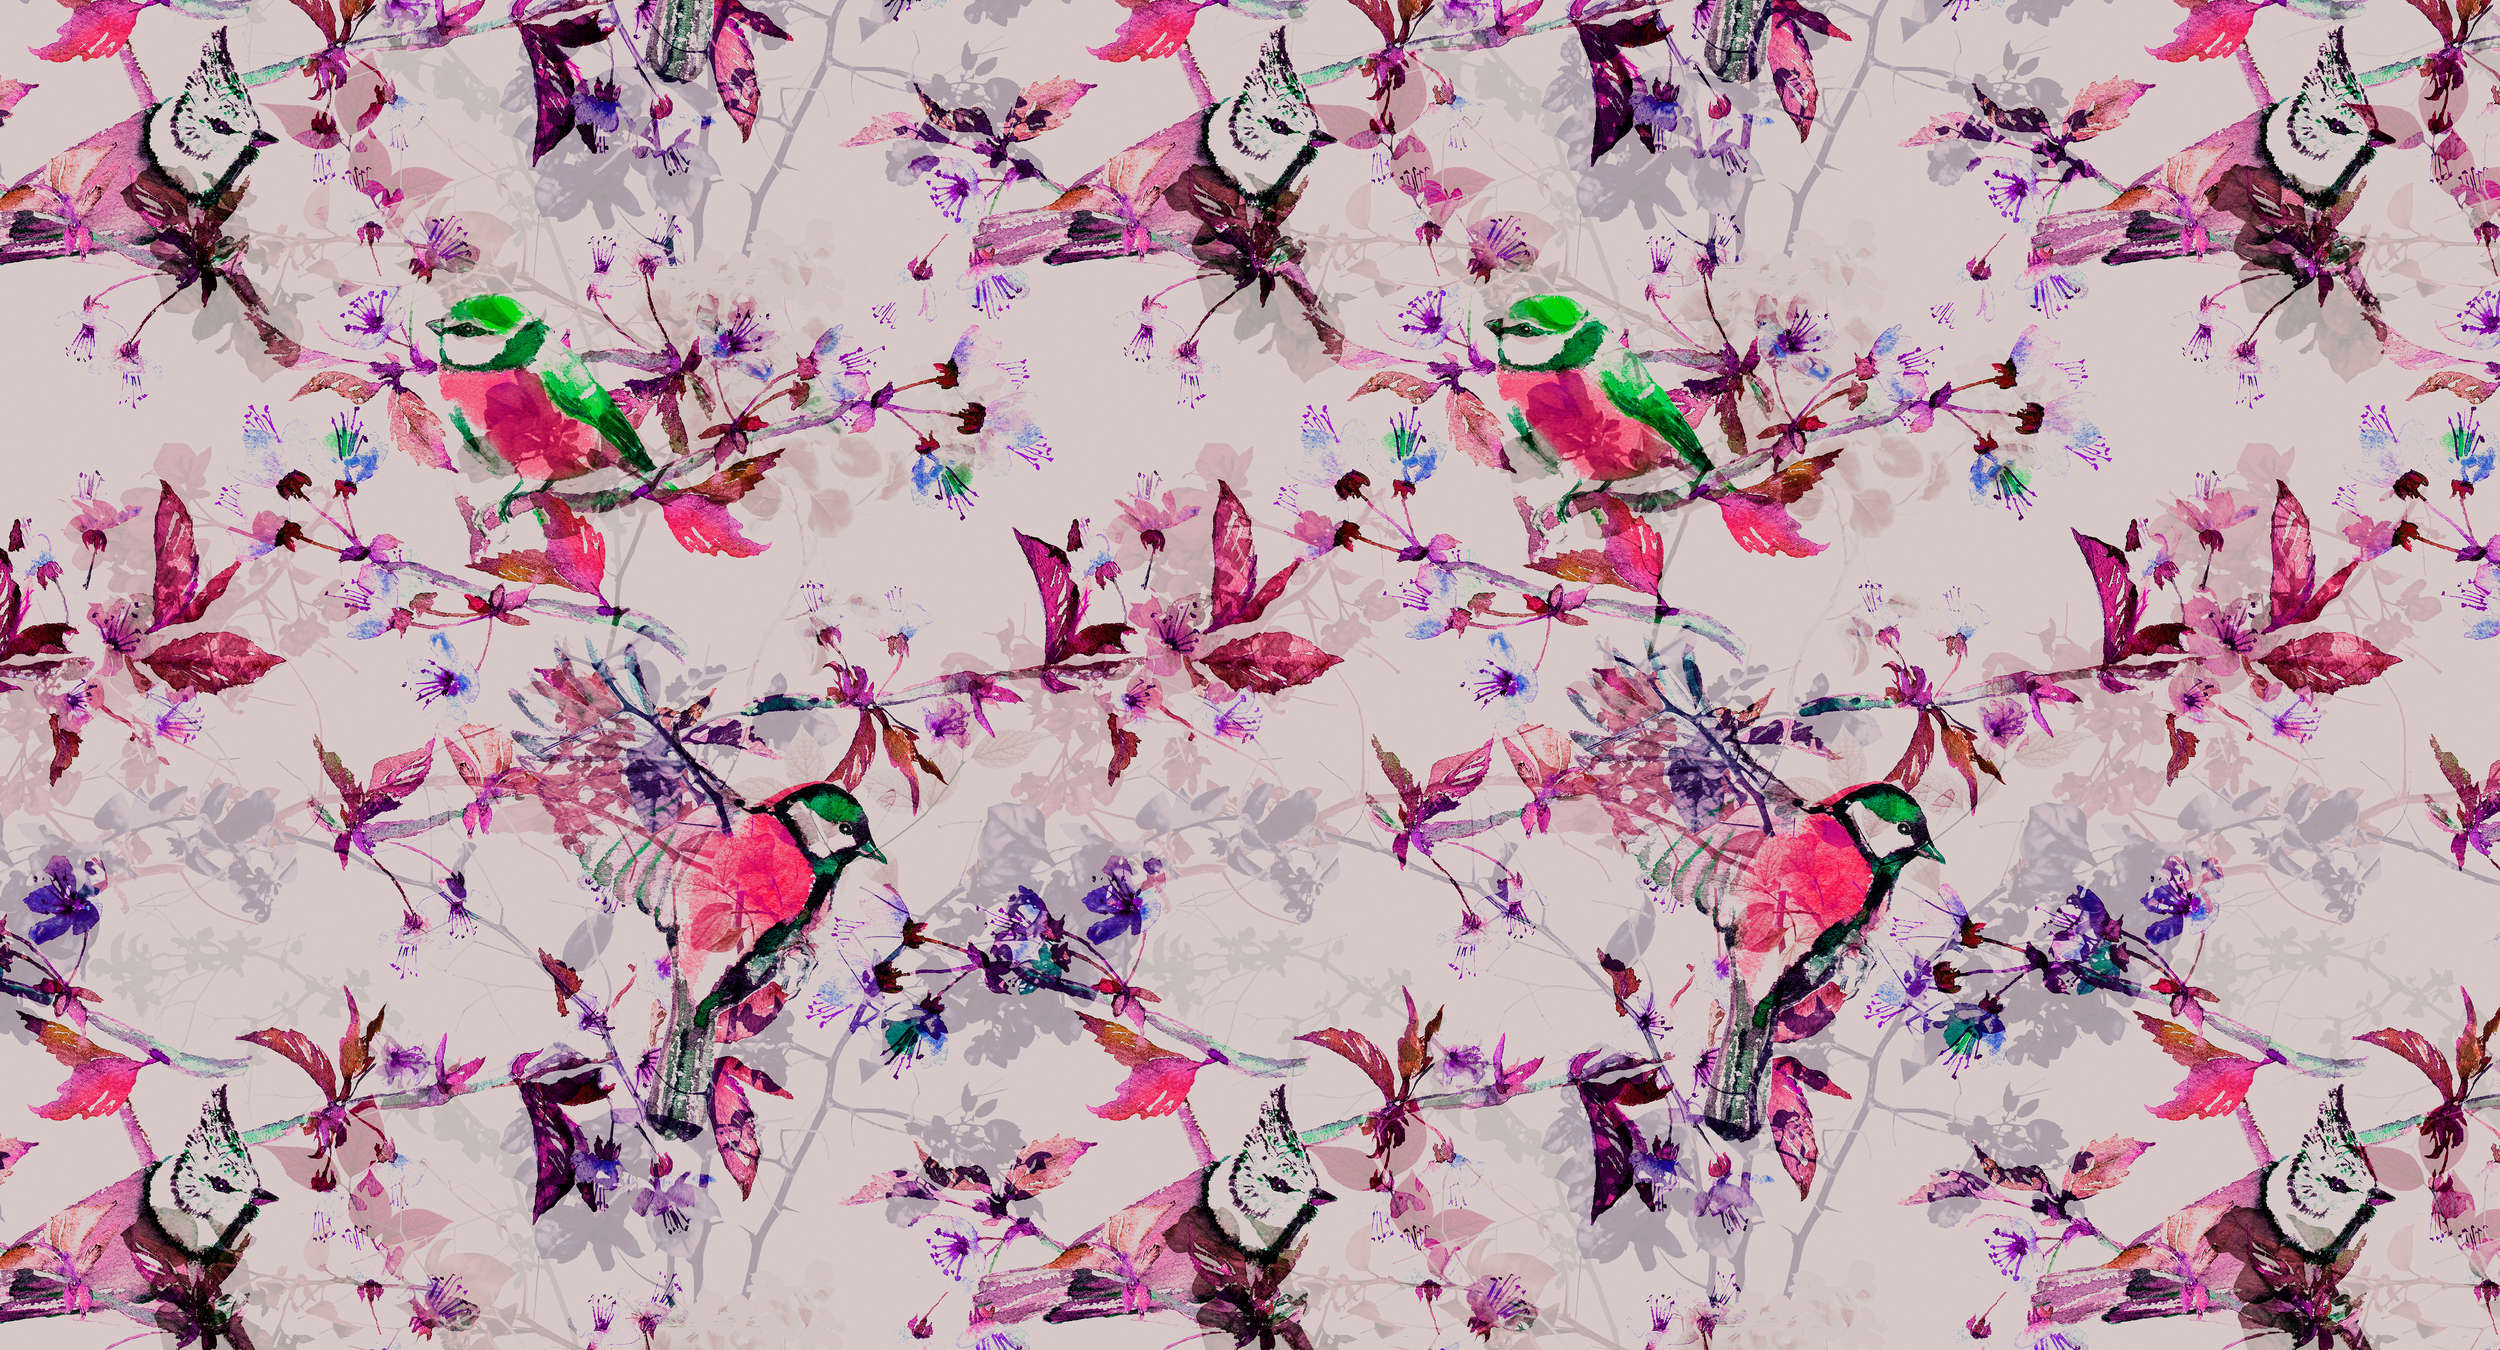             Papel pintado estilo collage de pájaros - rosa, azul
        